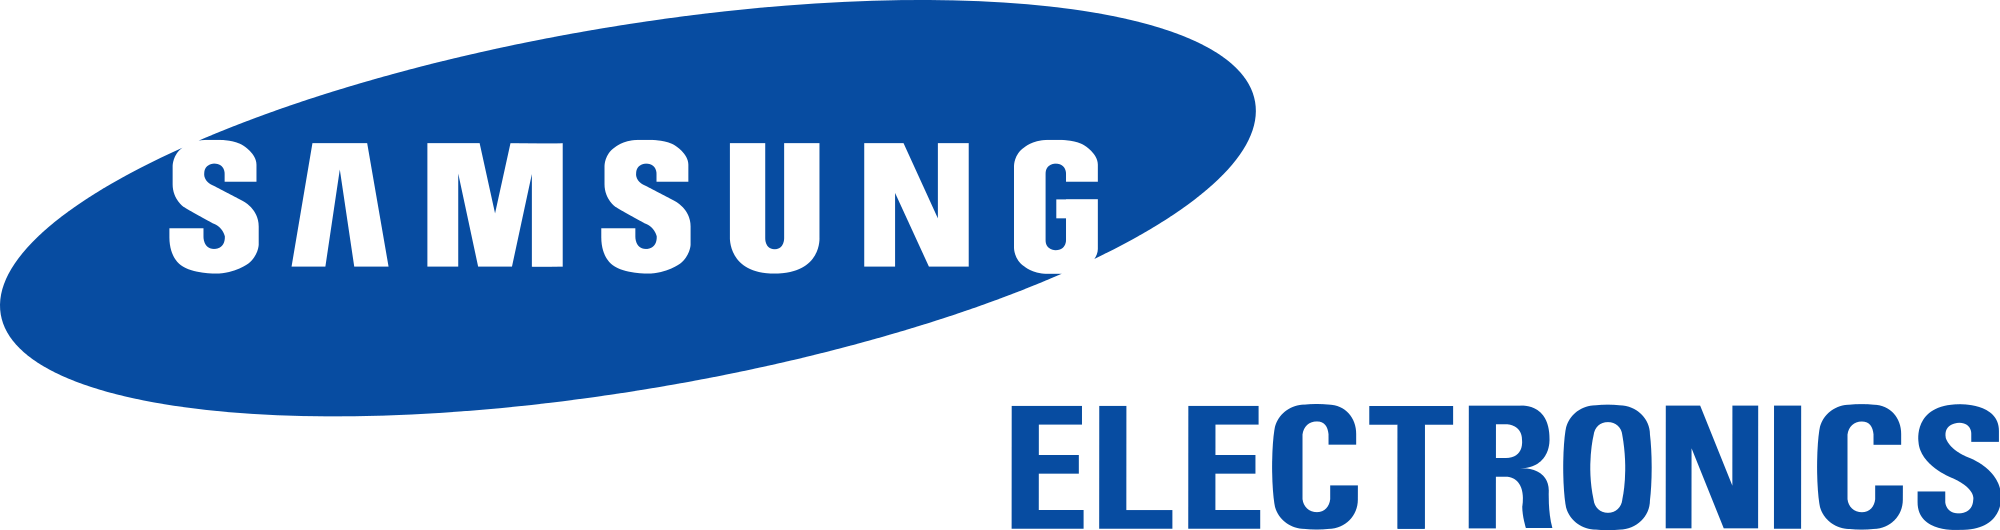 Samsung New Brand Logo - File:Samsung Electronics logo (english).svg - Wikimedia Commons